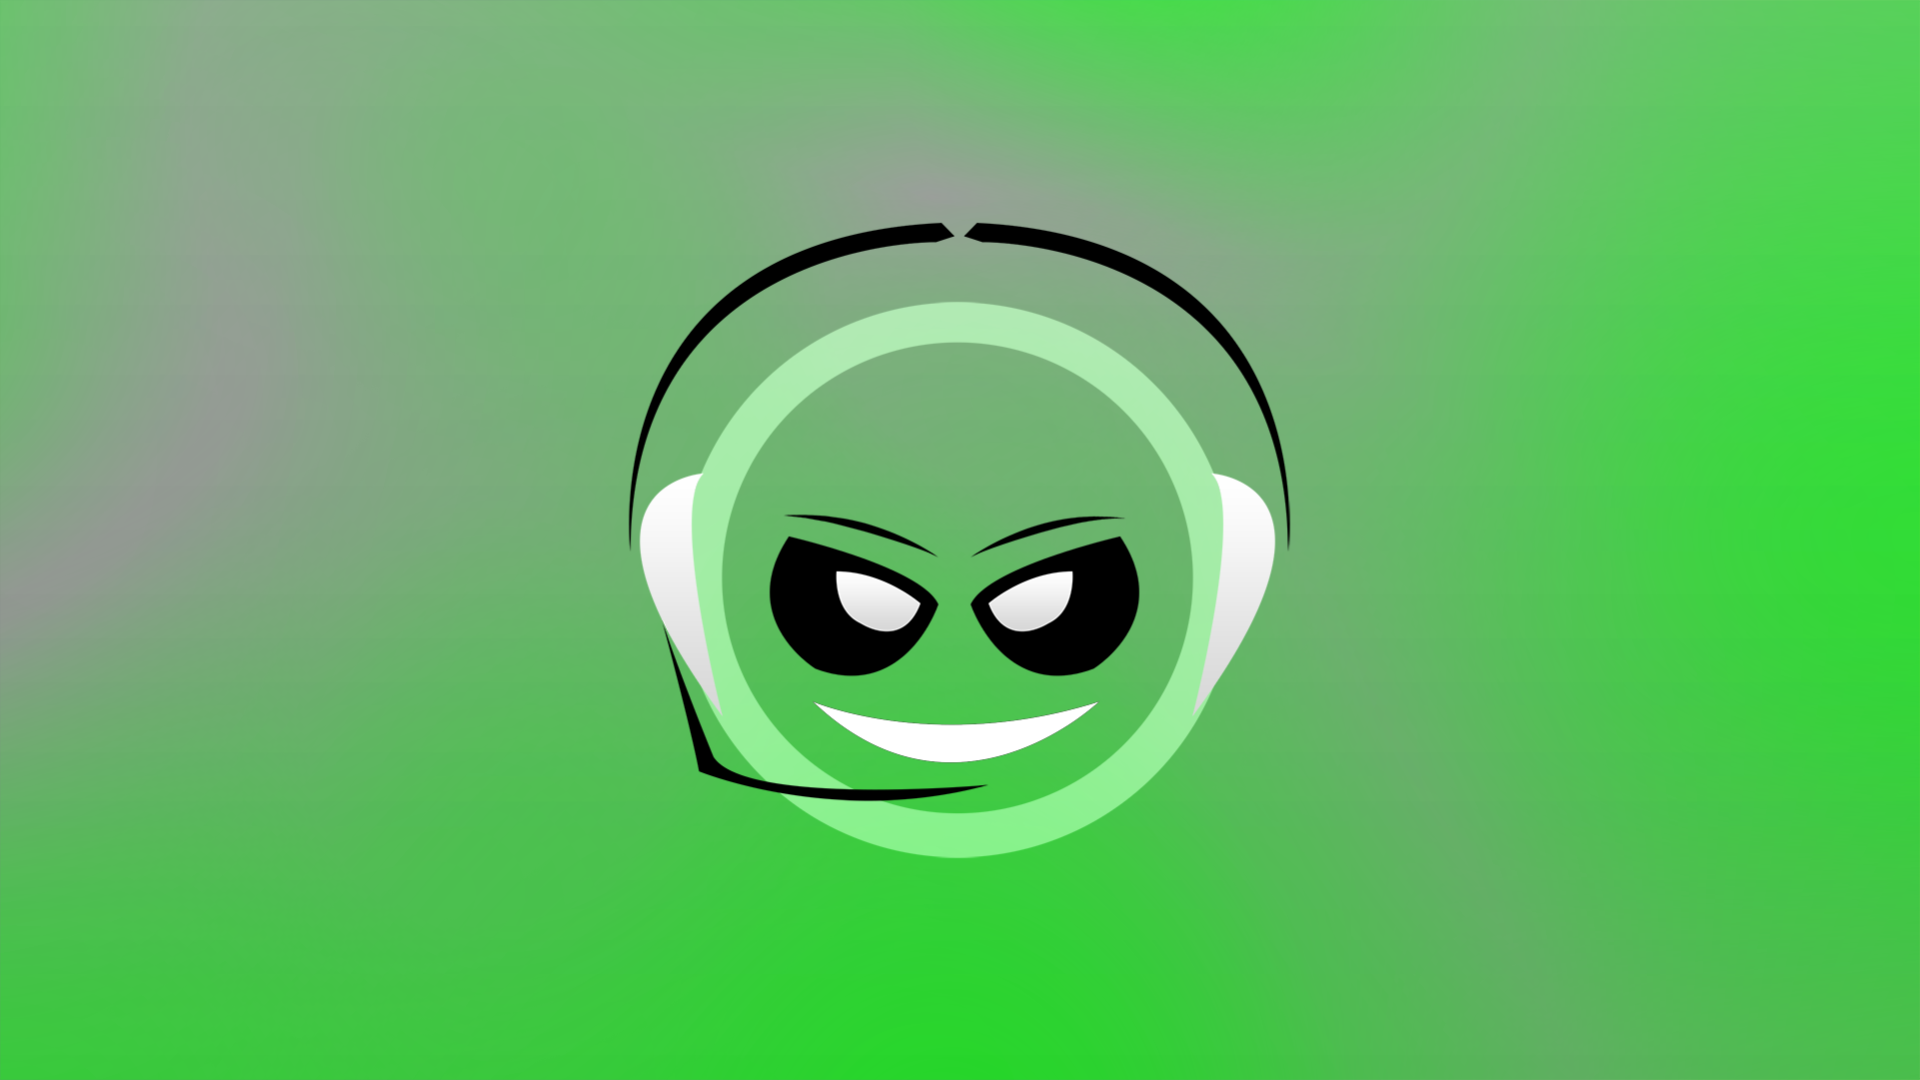 Cleaza Green Logo Smiley 1920x1080